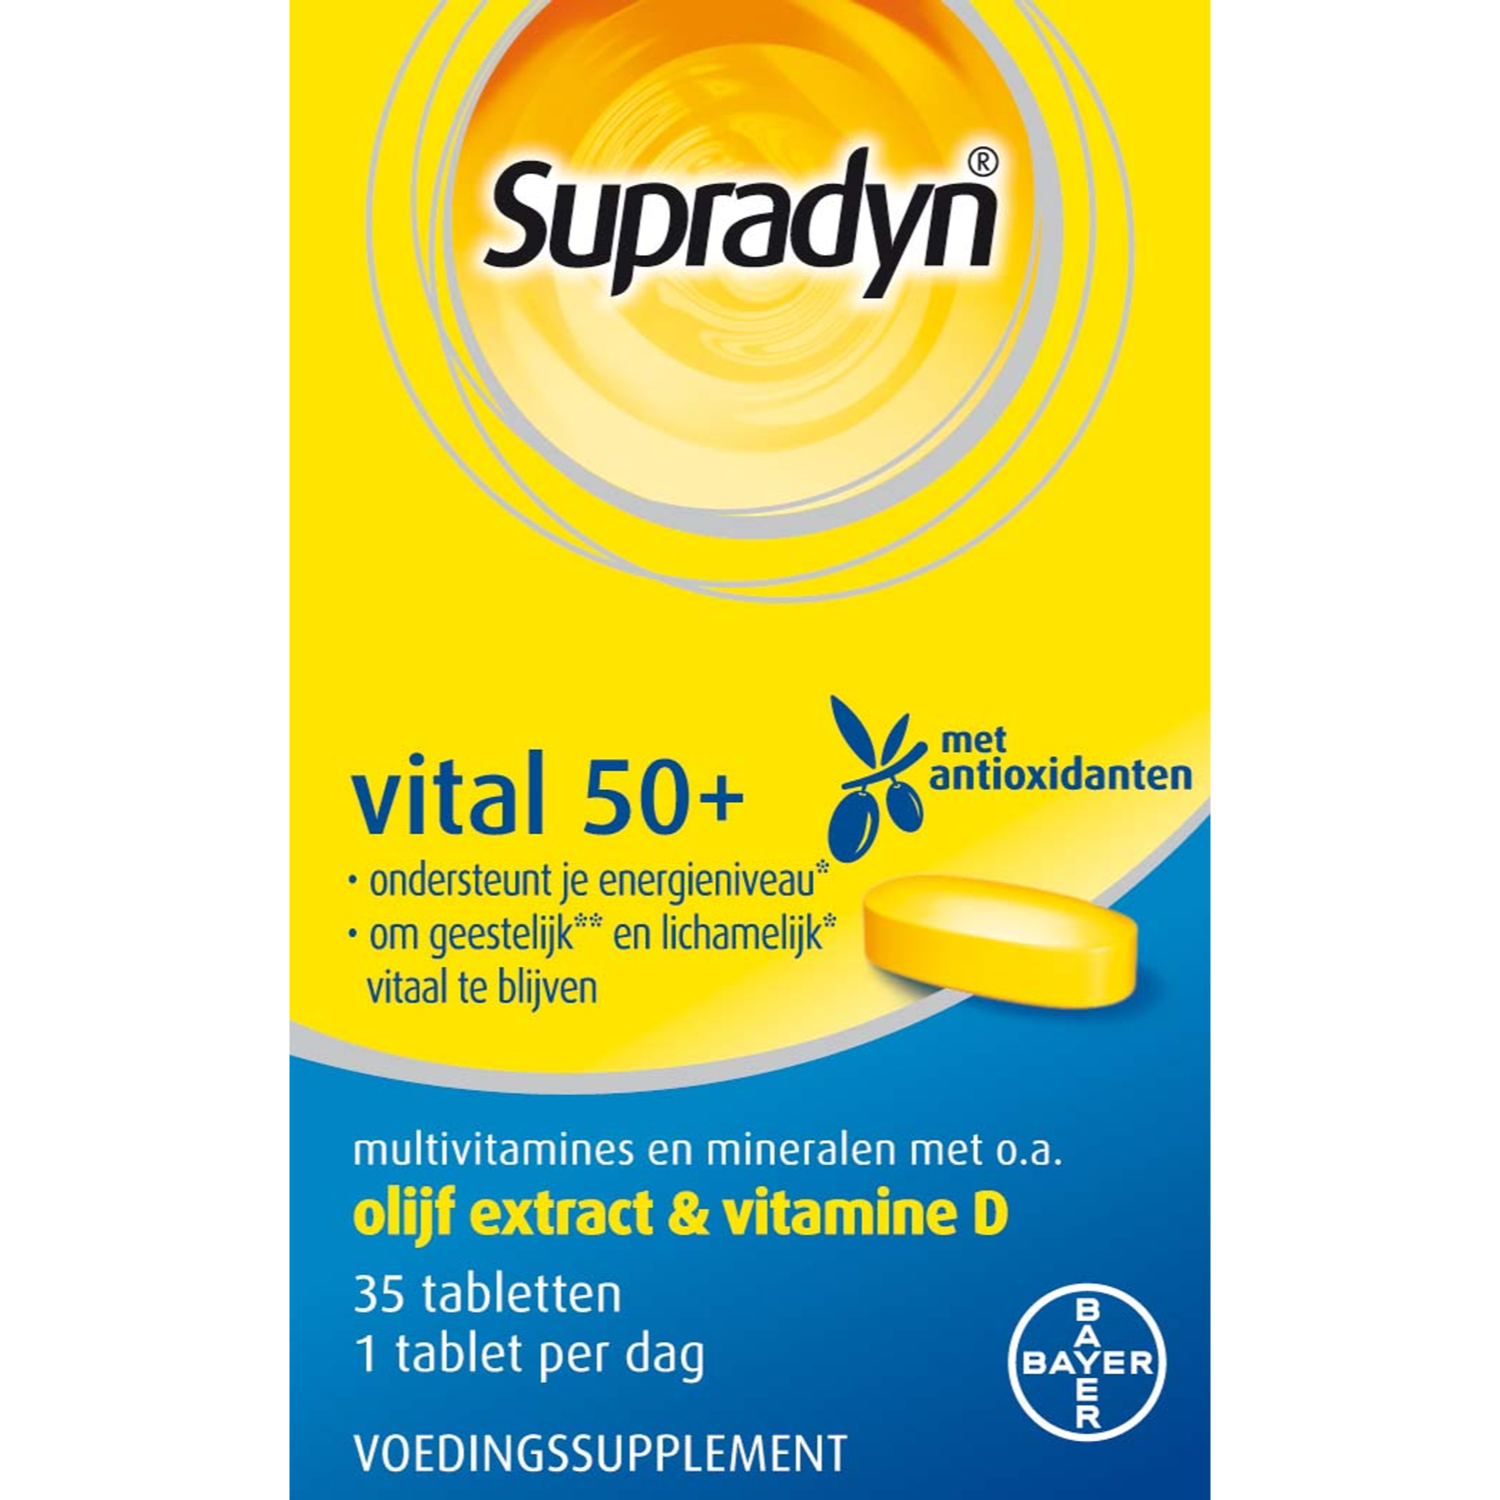 Uitbeelding shit Ontbering Supradyn Vital 50+ tabletten multi vitaminen & mineralen bestellen?